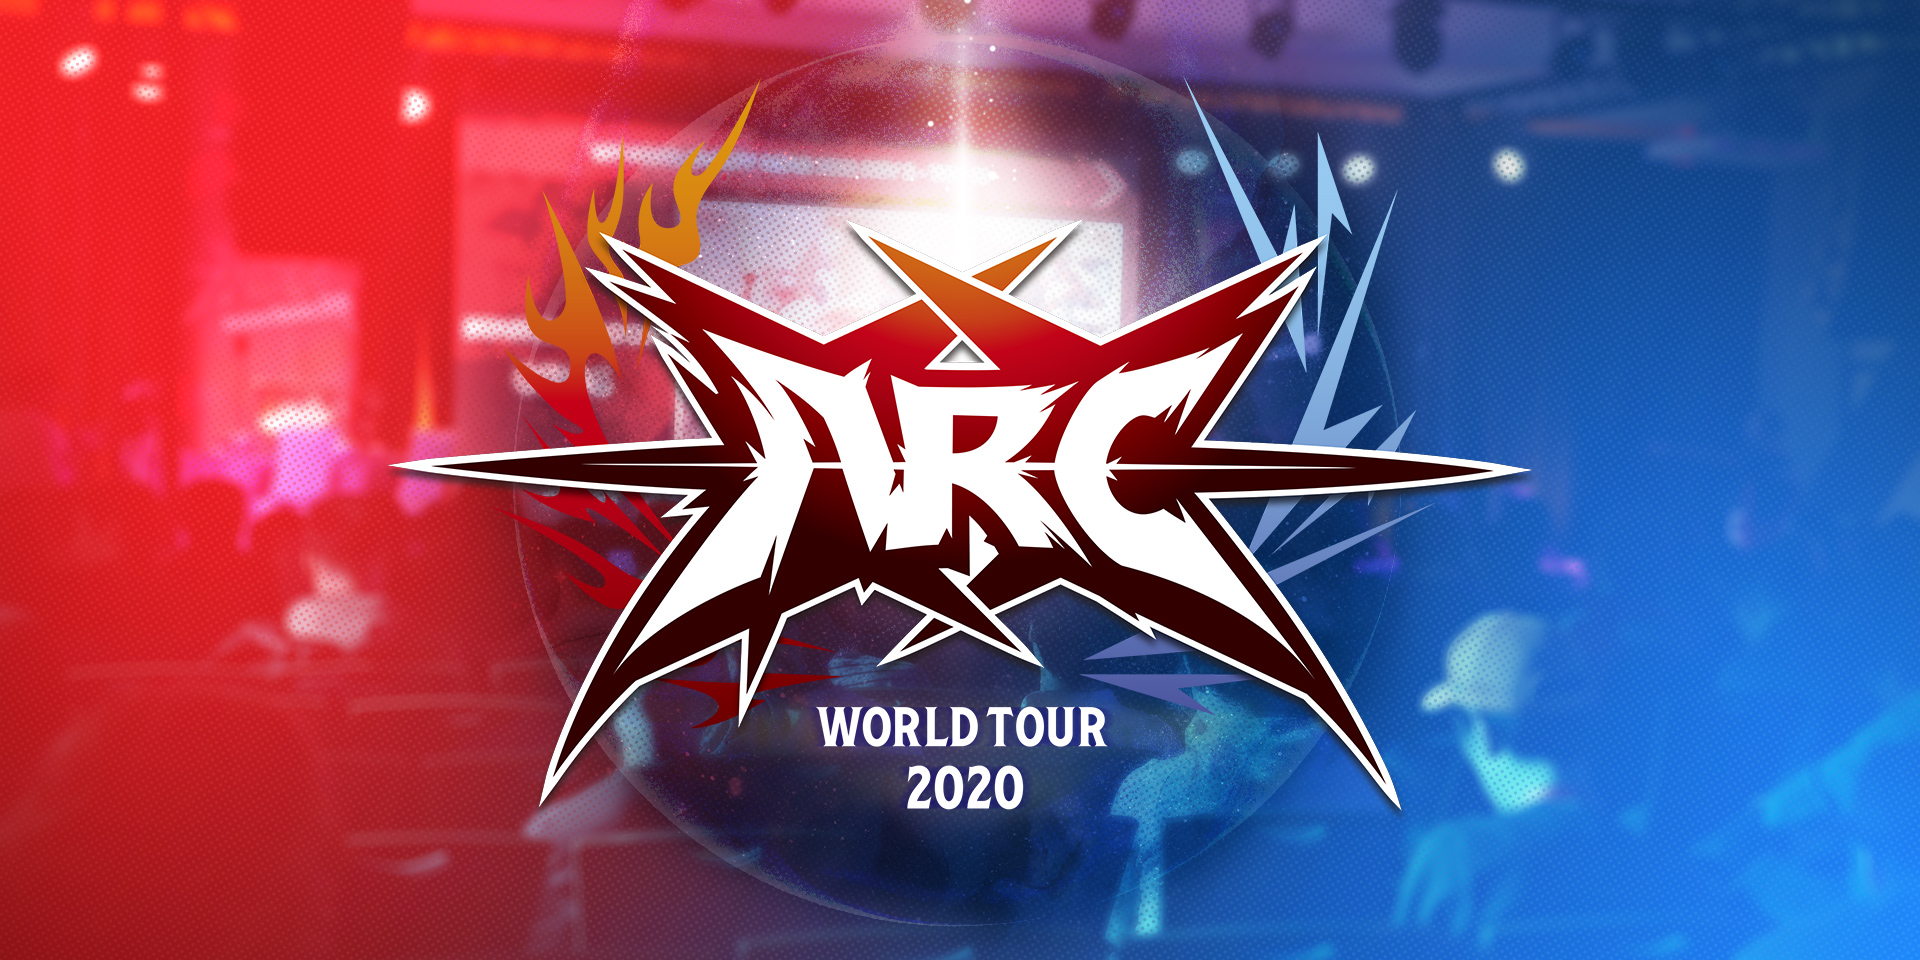 Arc World Tour 2020 Update – Daredevil Events